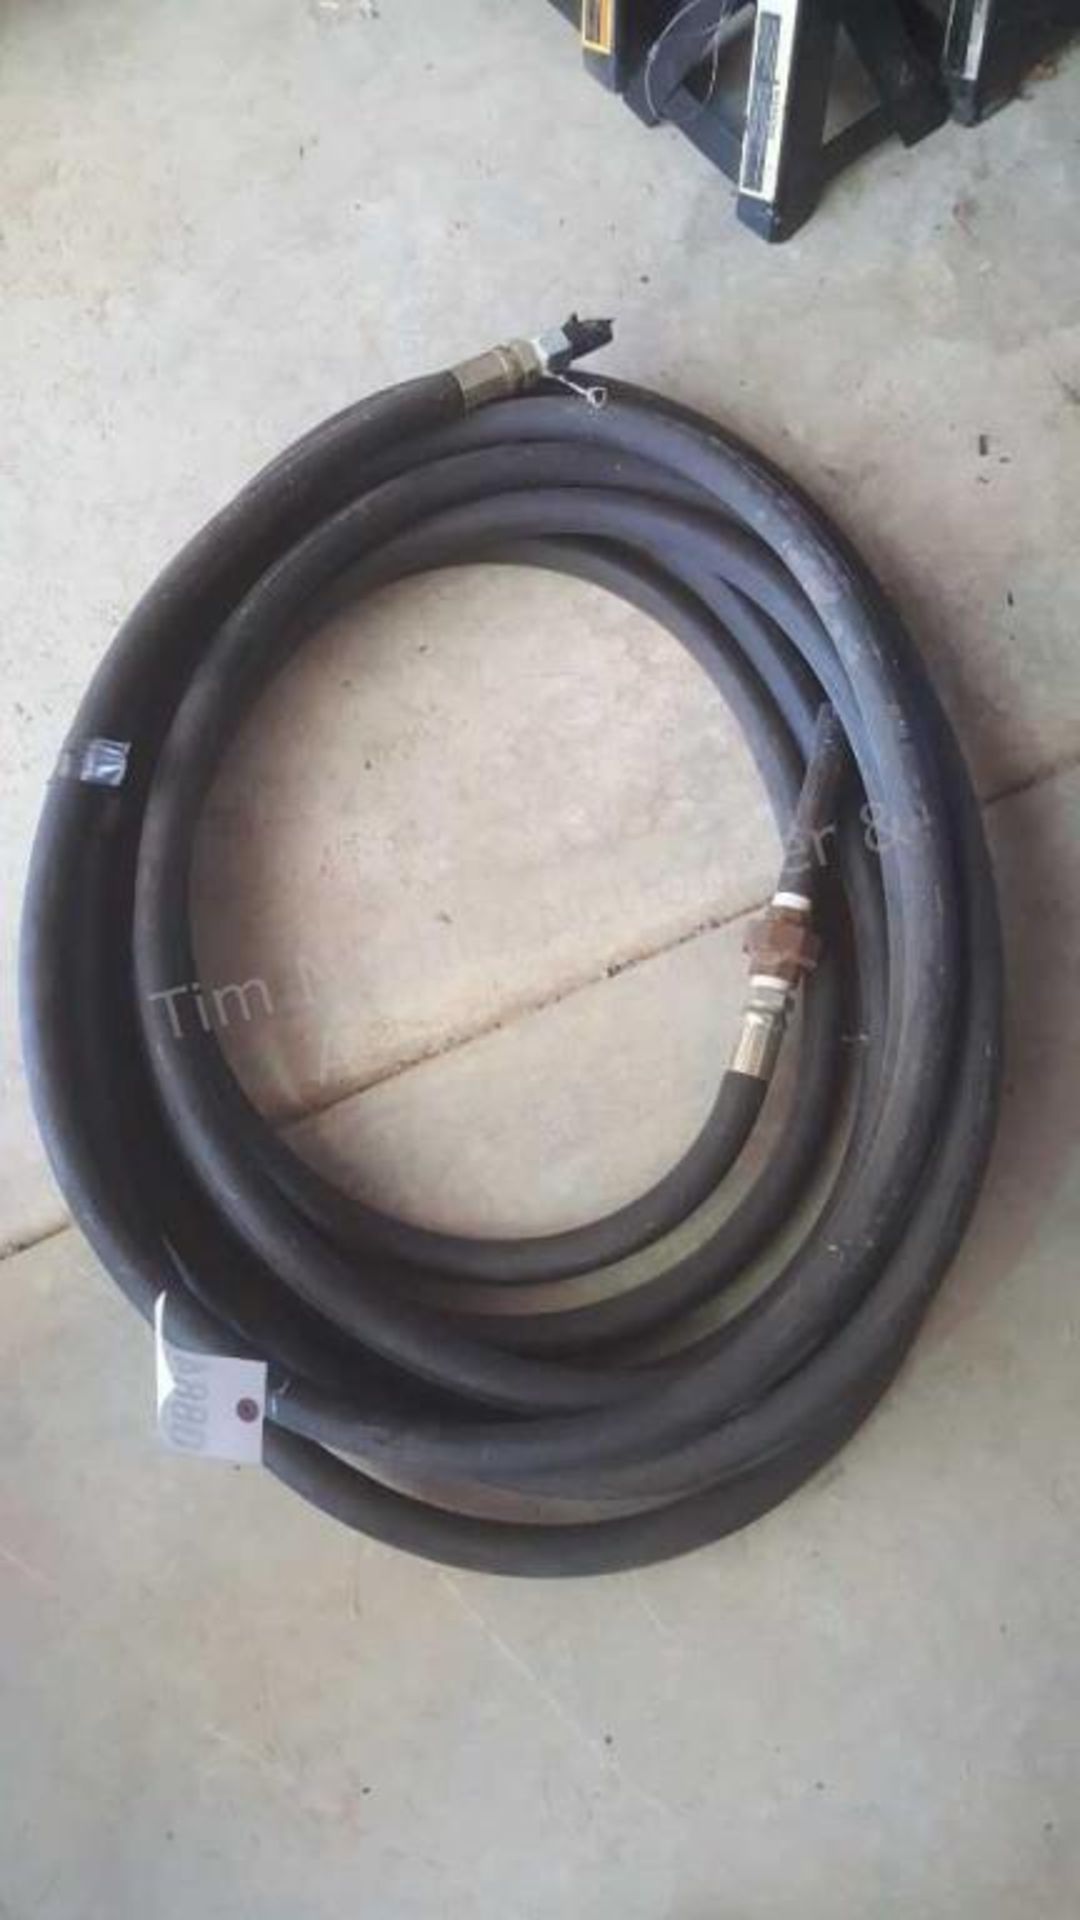 Length of large diameter hydraulic hose